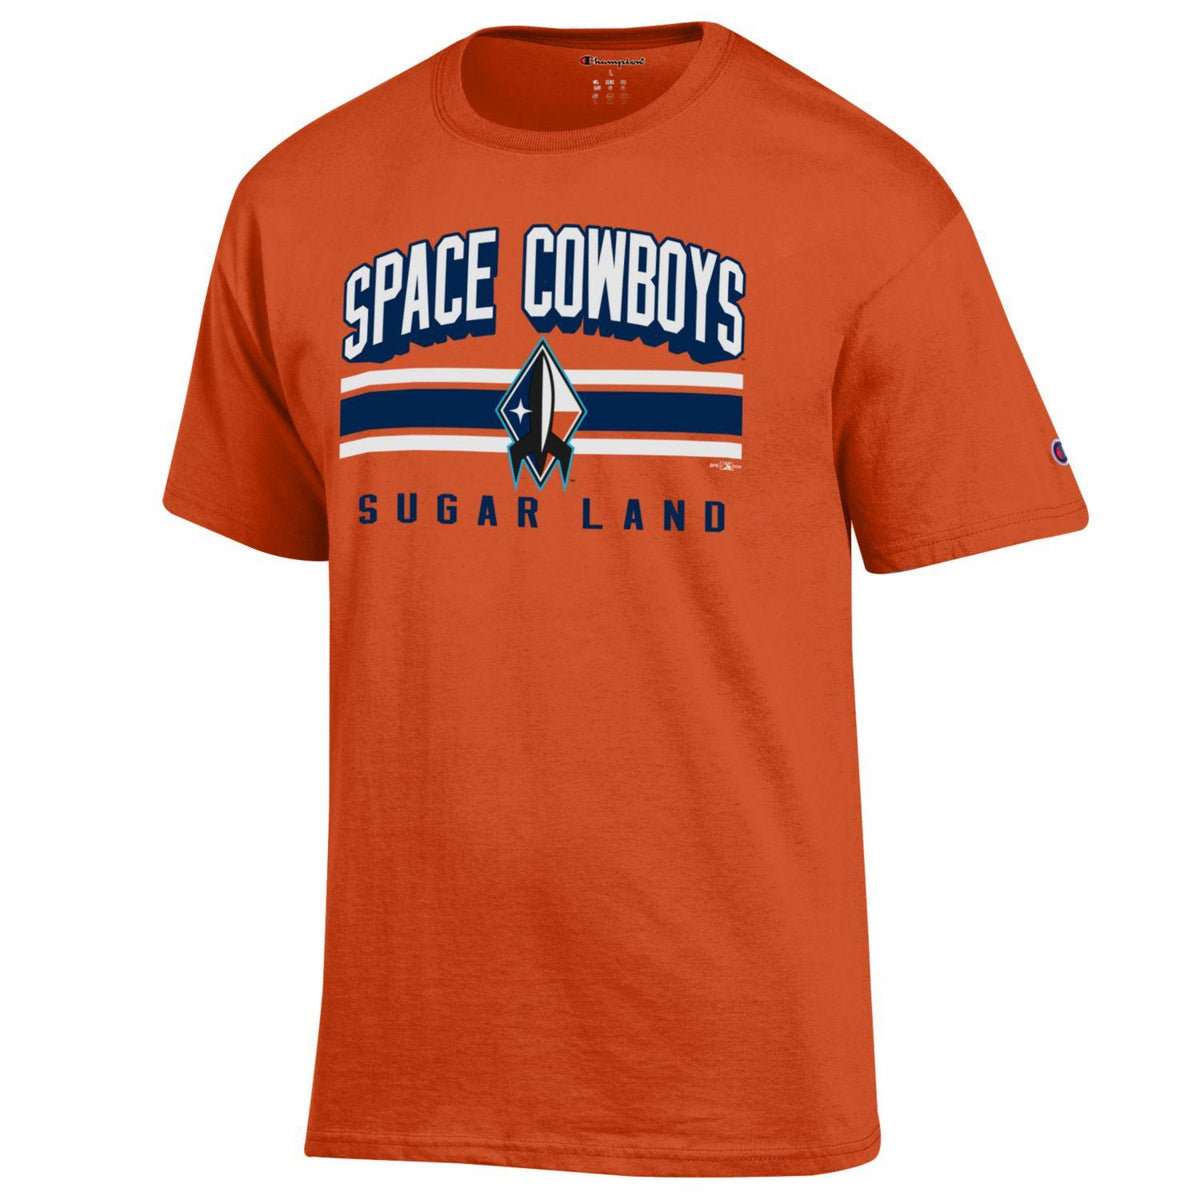 Sugar Land Space Cowboys Champion T Jersey Orange